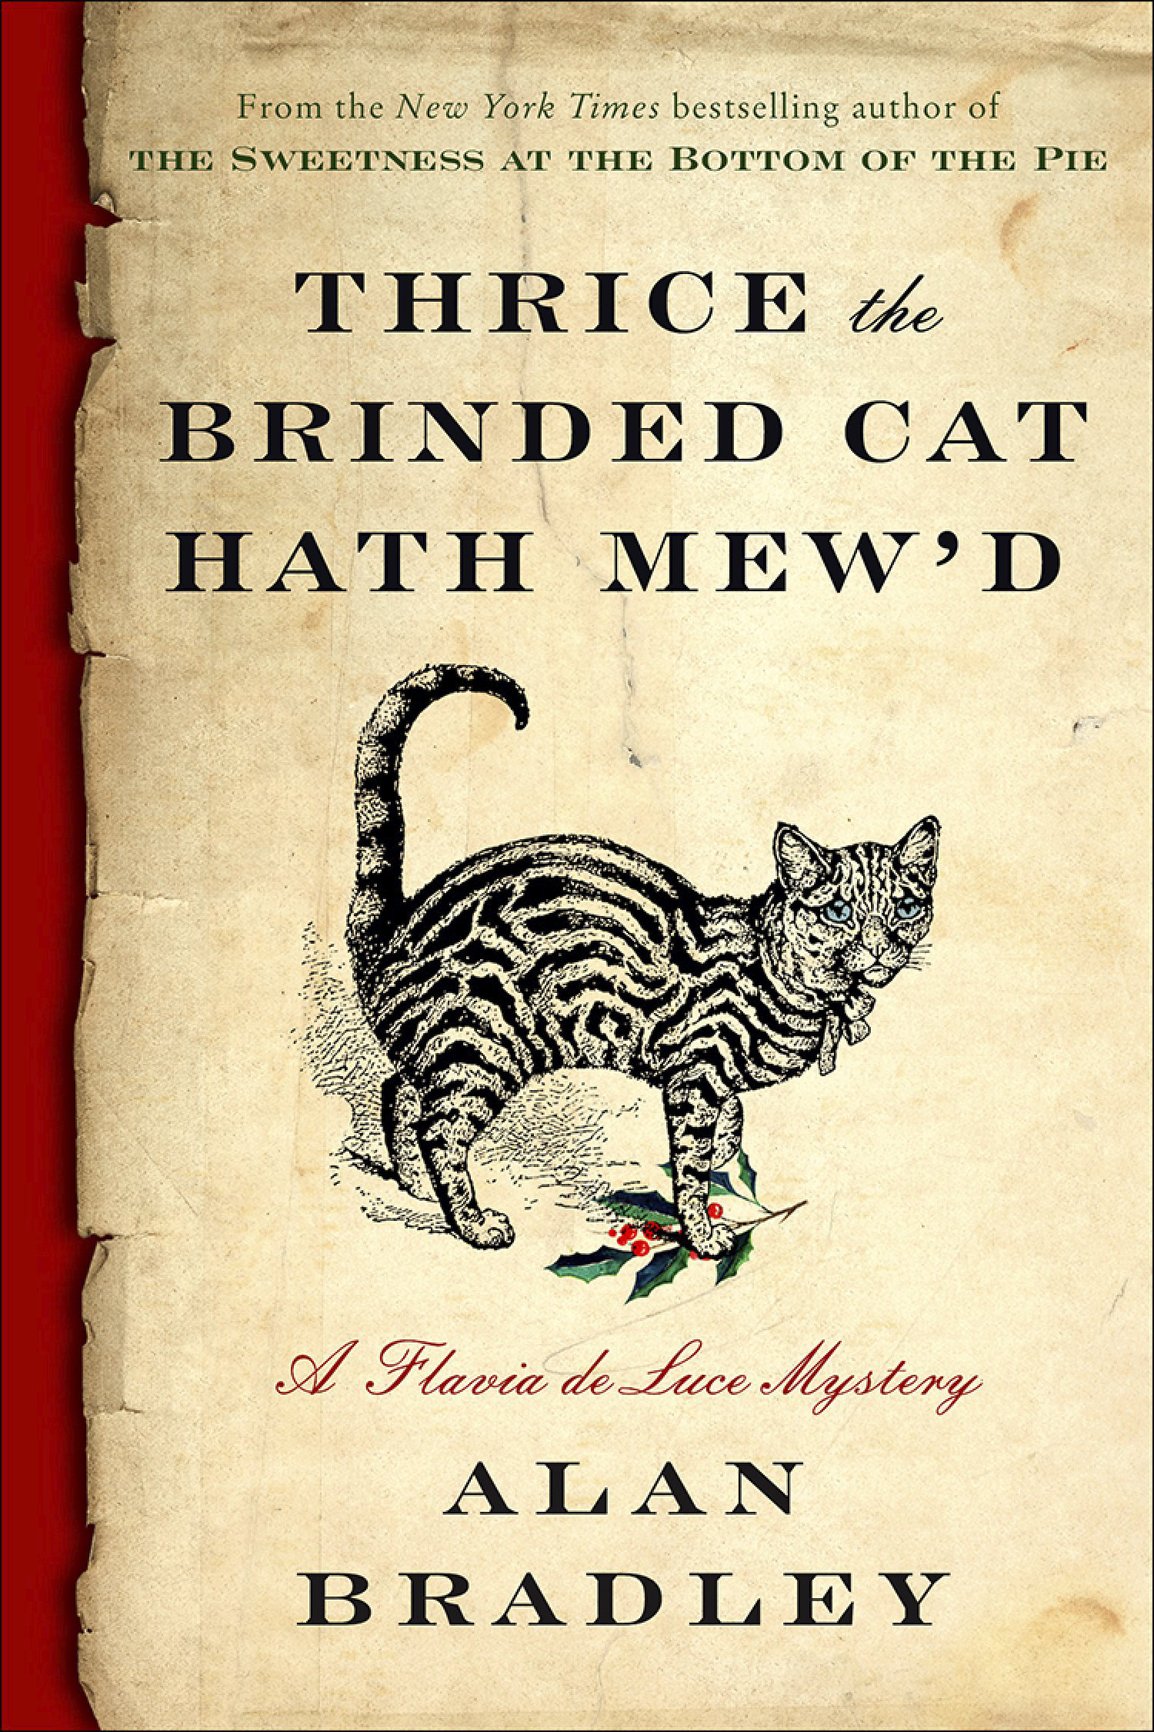 Thrice the Brinded Cat Hath Mew'd (2016) by Alan Bradley